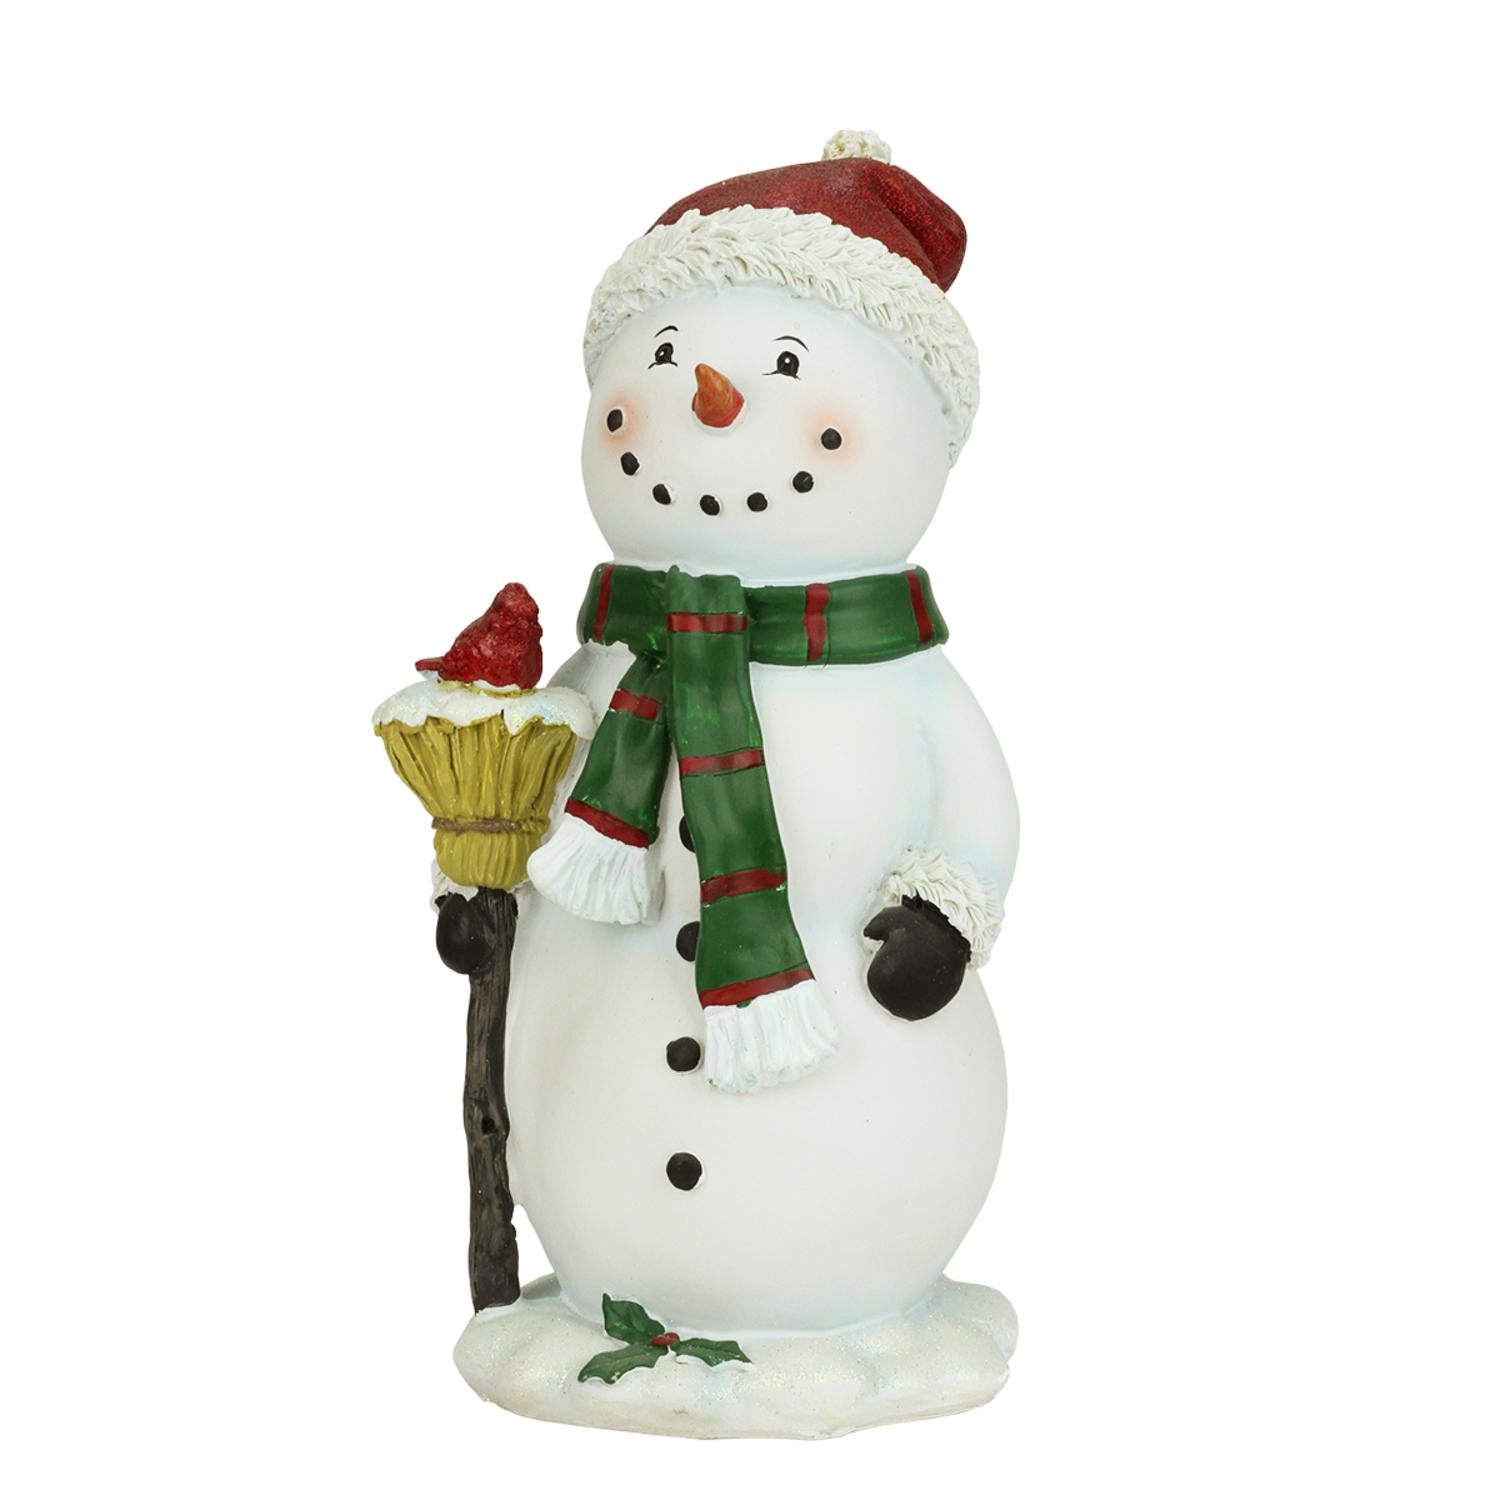 10.25" Festive Snowman Holding Broom with Cardinal Bird Christmas Figure